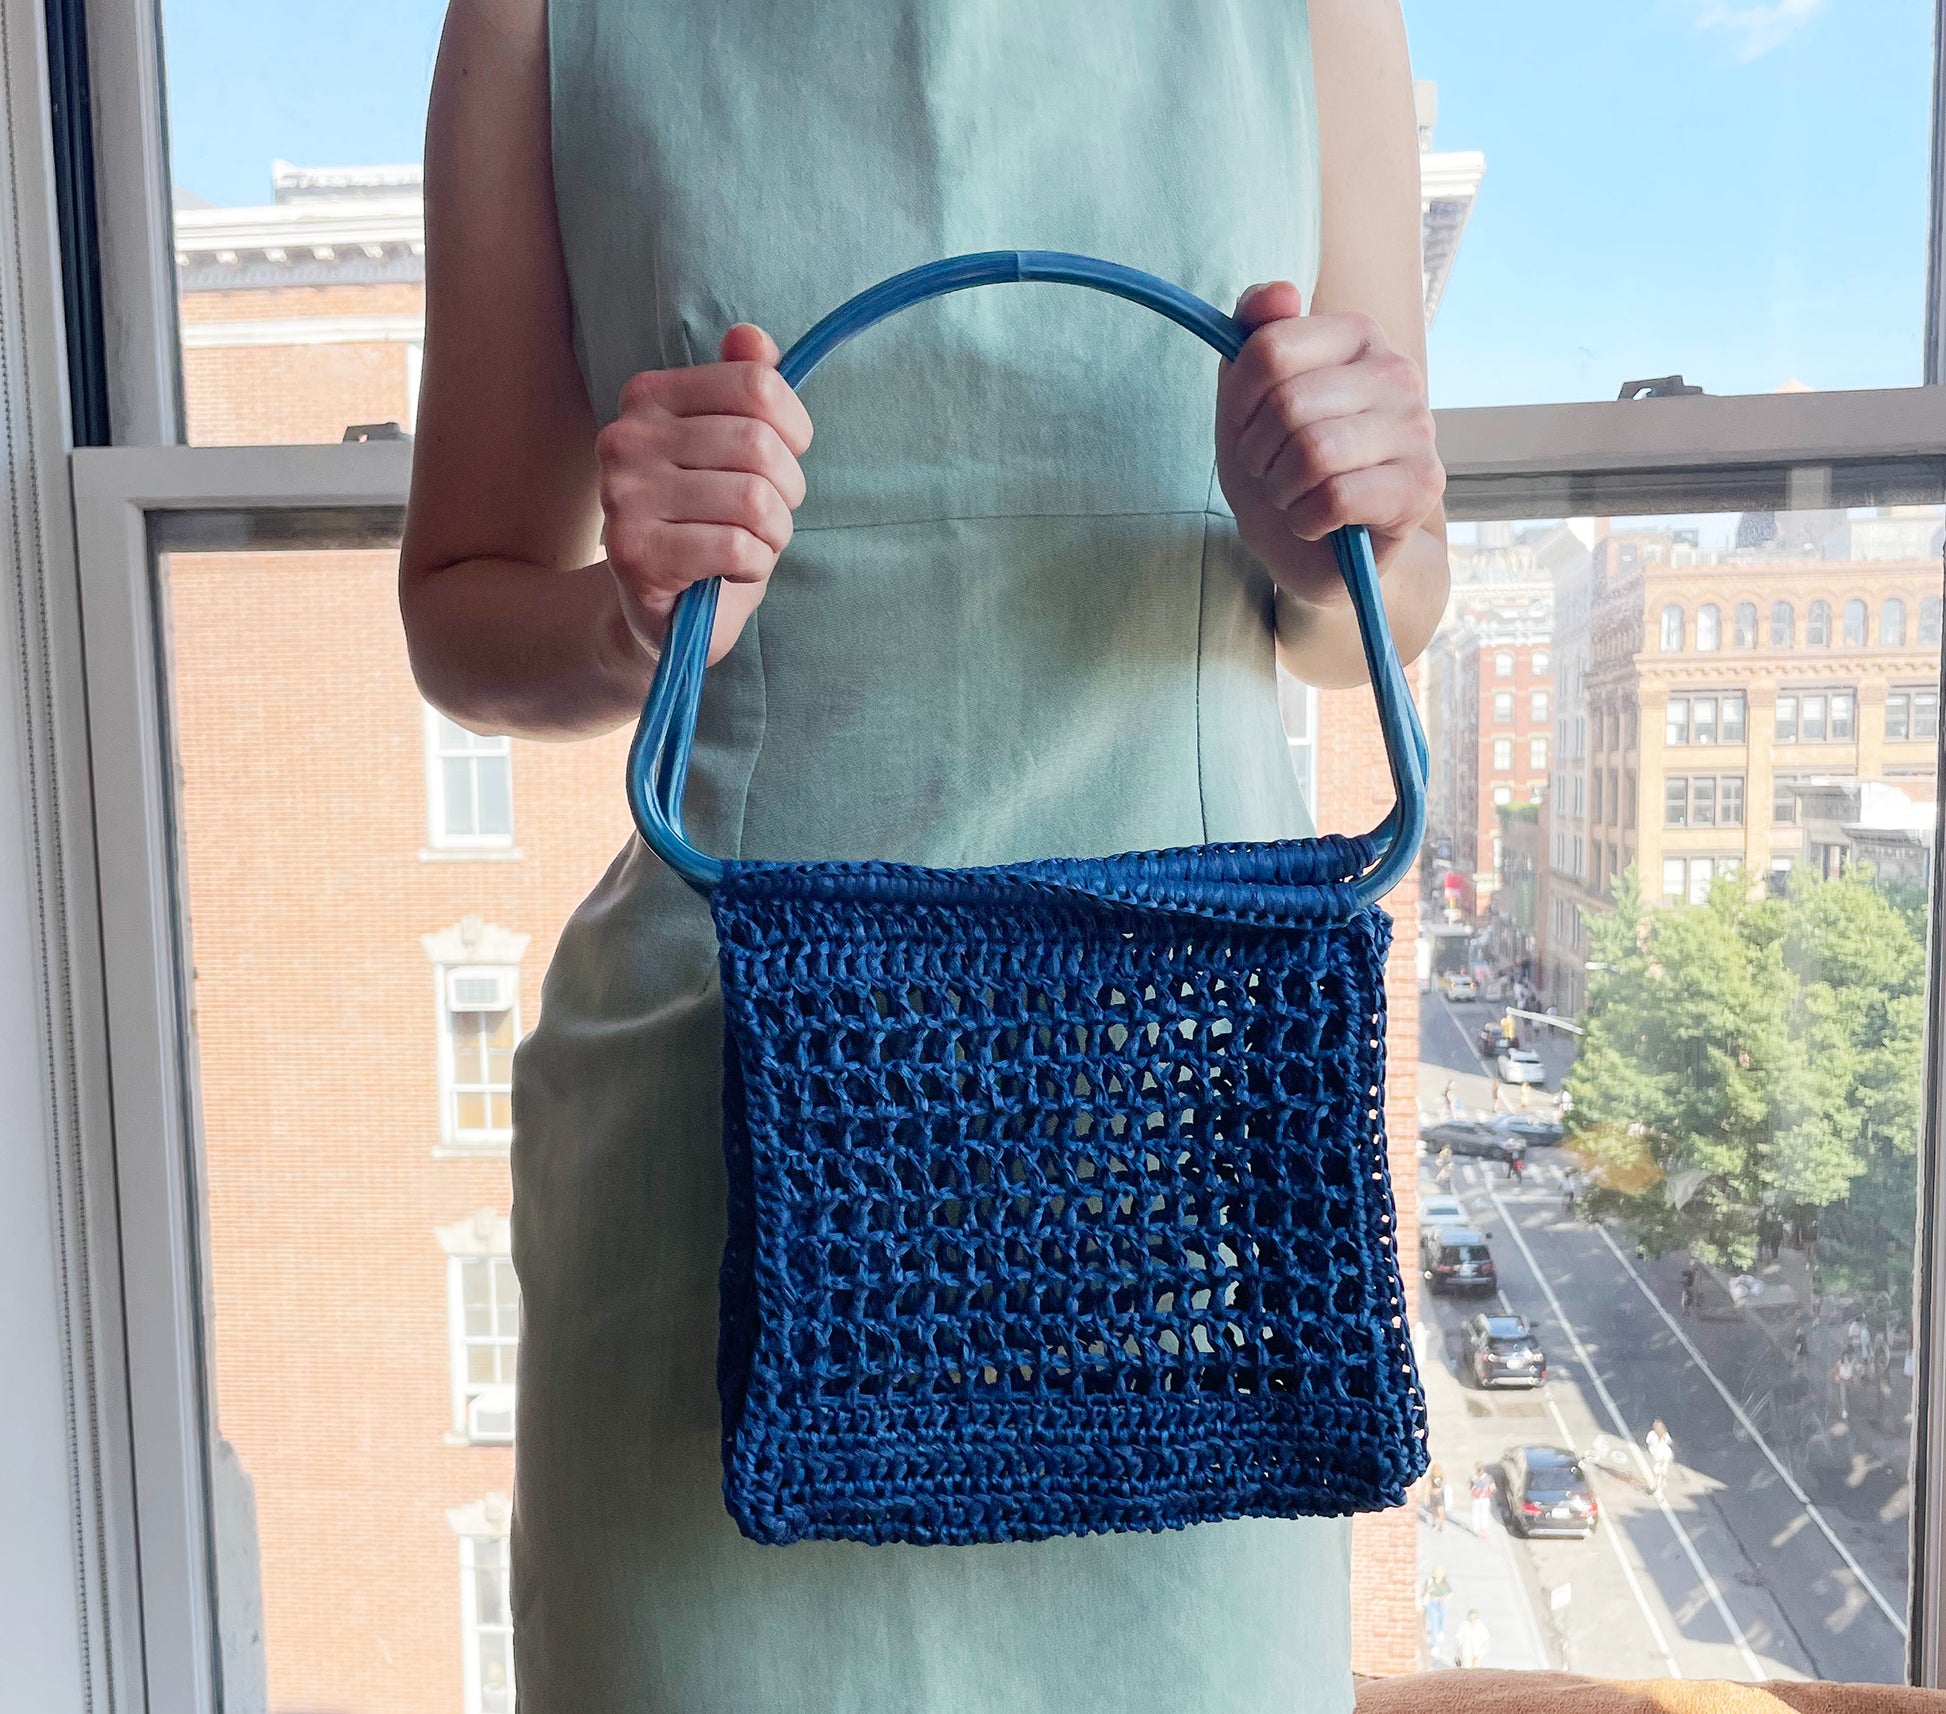 Model holding the blue market raffia bag